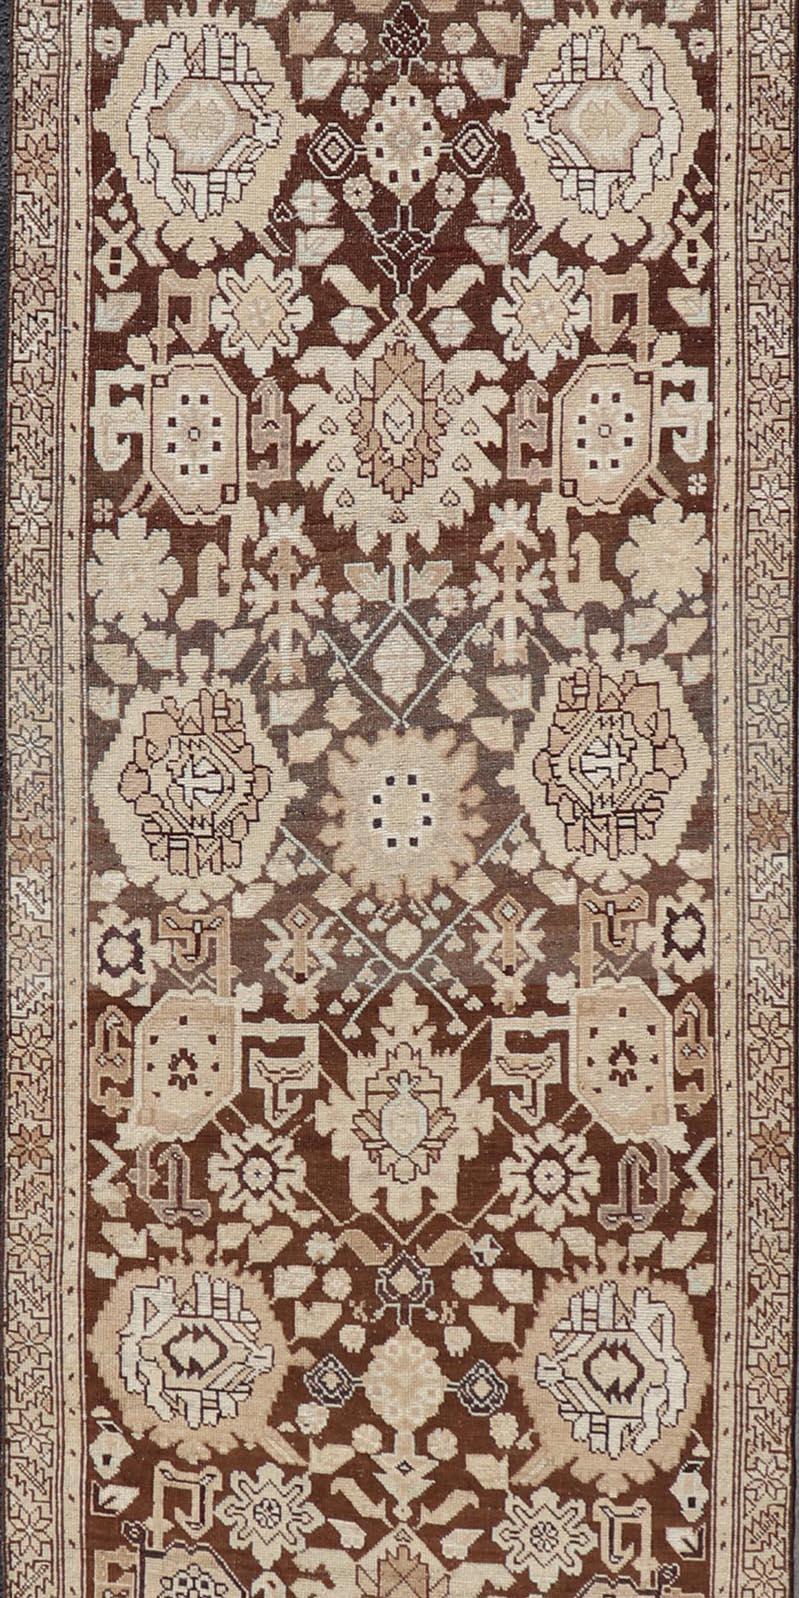 Antique Karabagh in brown and tan colored antique Karabagh runner with floral design, Keivan Woven Arts / rug EMB-9619-P13569, country of origin / type: / Karabagh, circa 1900.

Measures: 3'4 x 15'7.